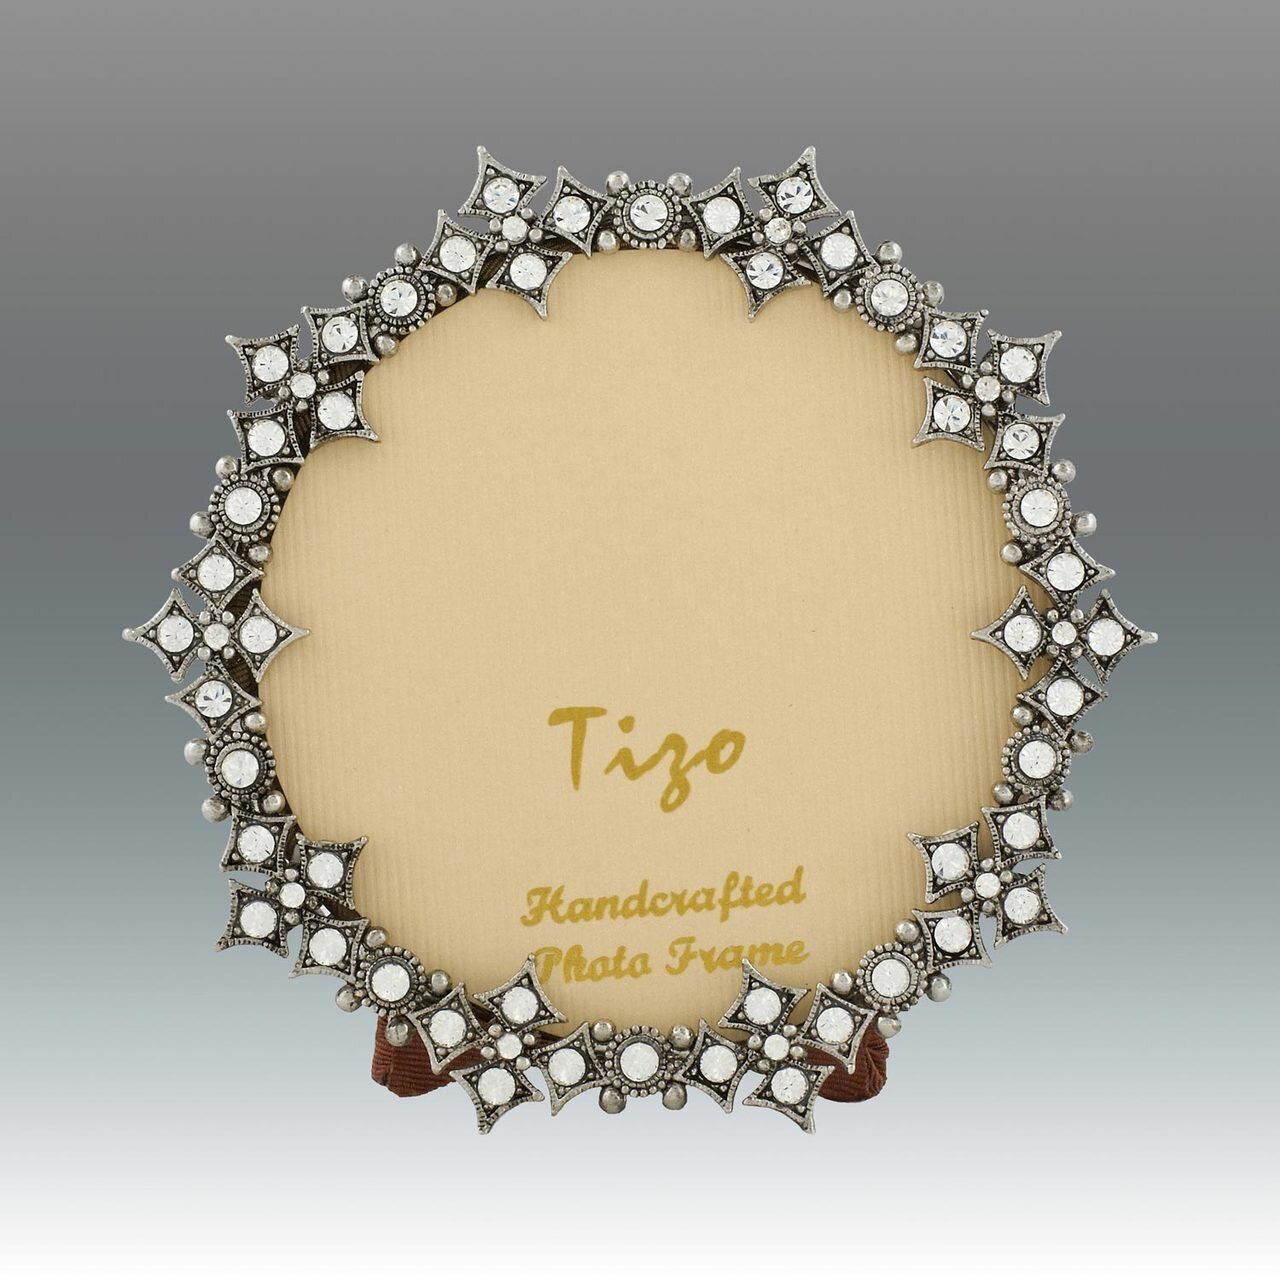 Tizo White Pearls 3 Inch Round Jeweltone Picture Frame